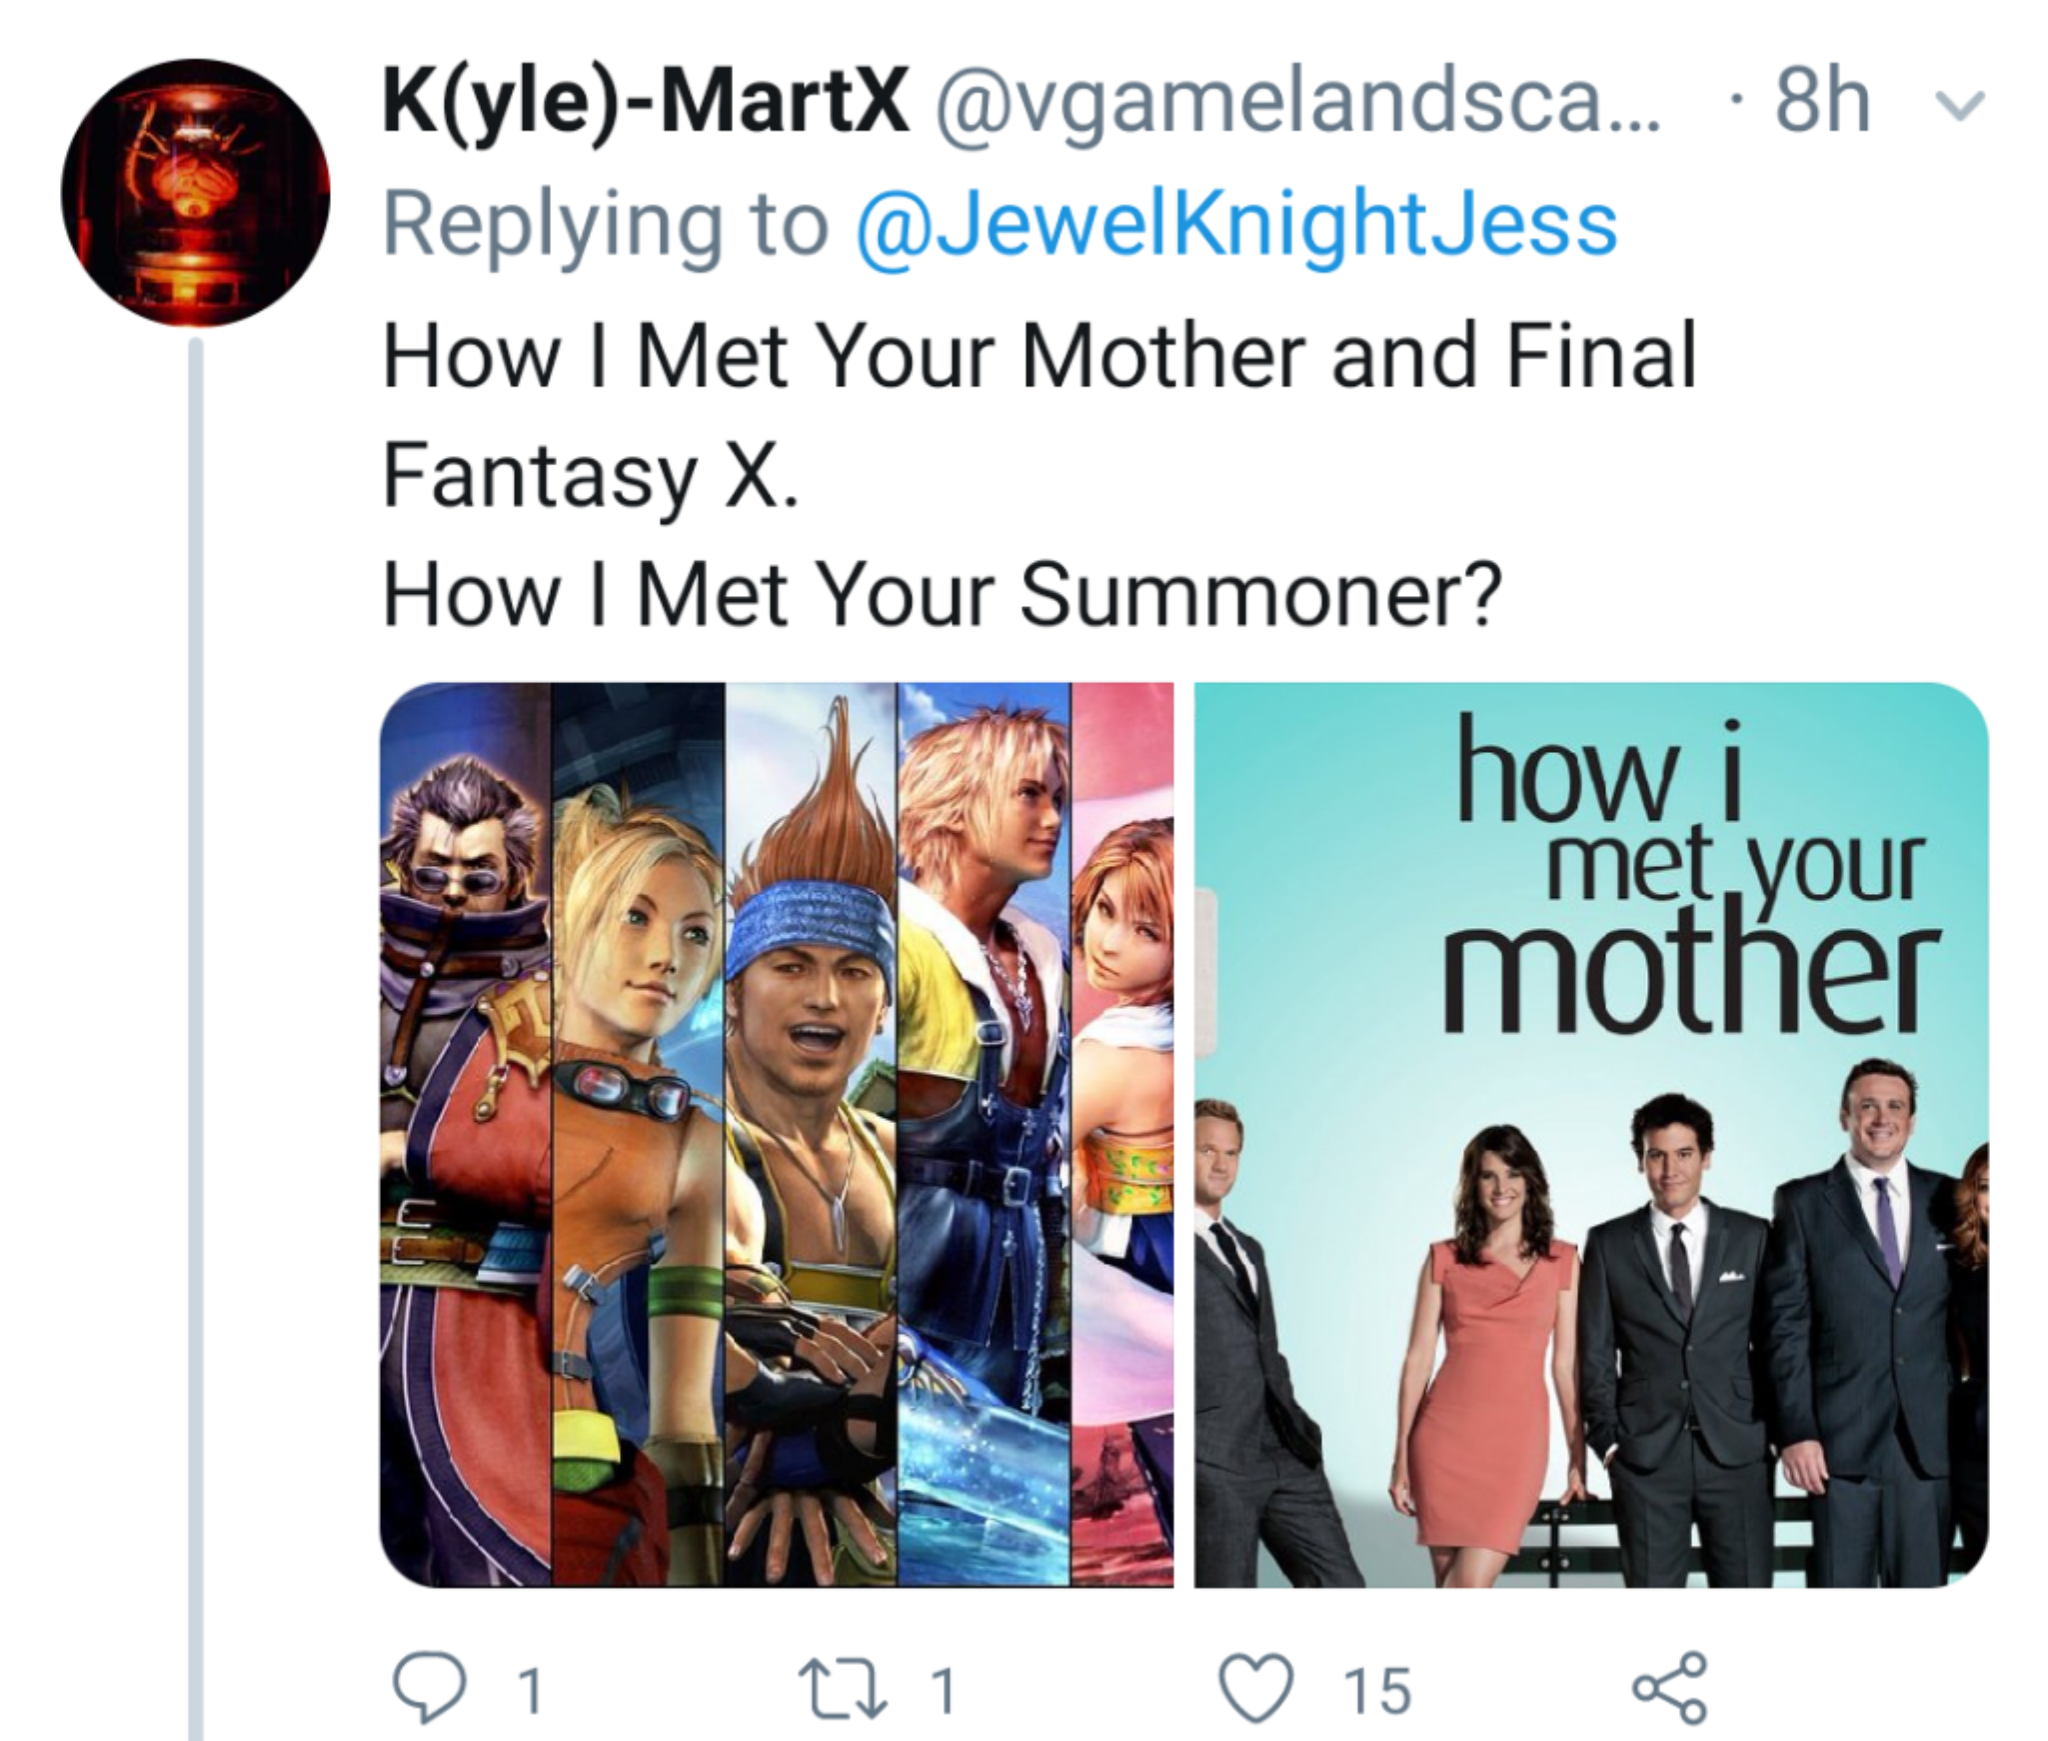 presentation - KyleMartx... 8h How I Met Your Mother and Final Fantasy X. How I Met Your Summoner? how i met your mother 9 1 221 15